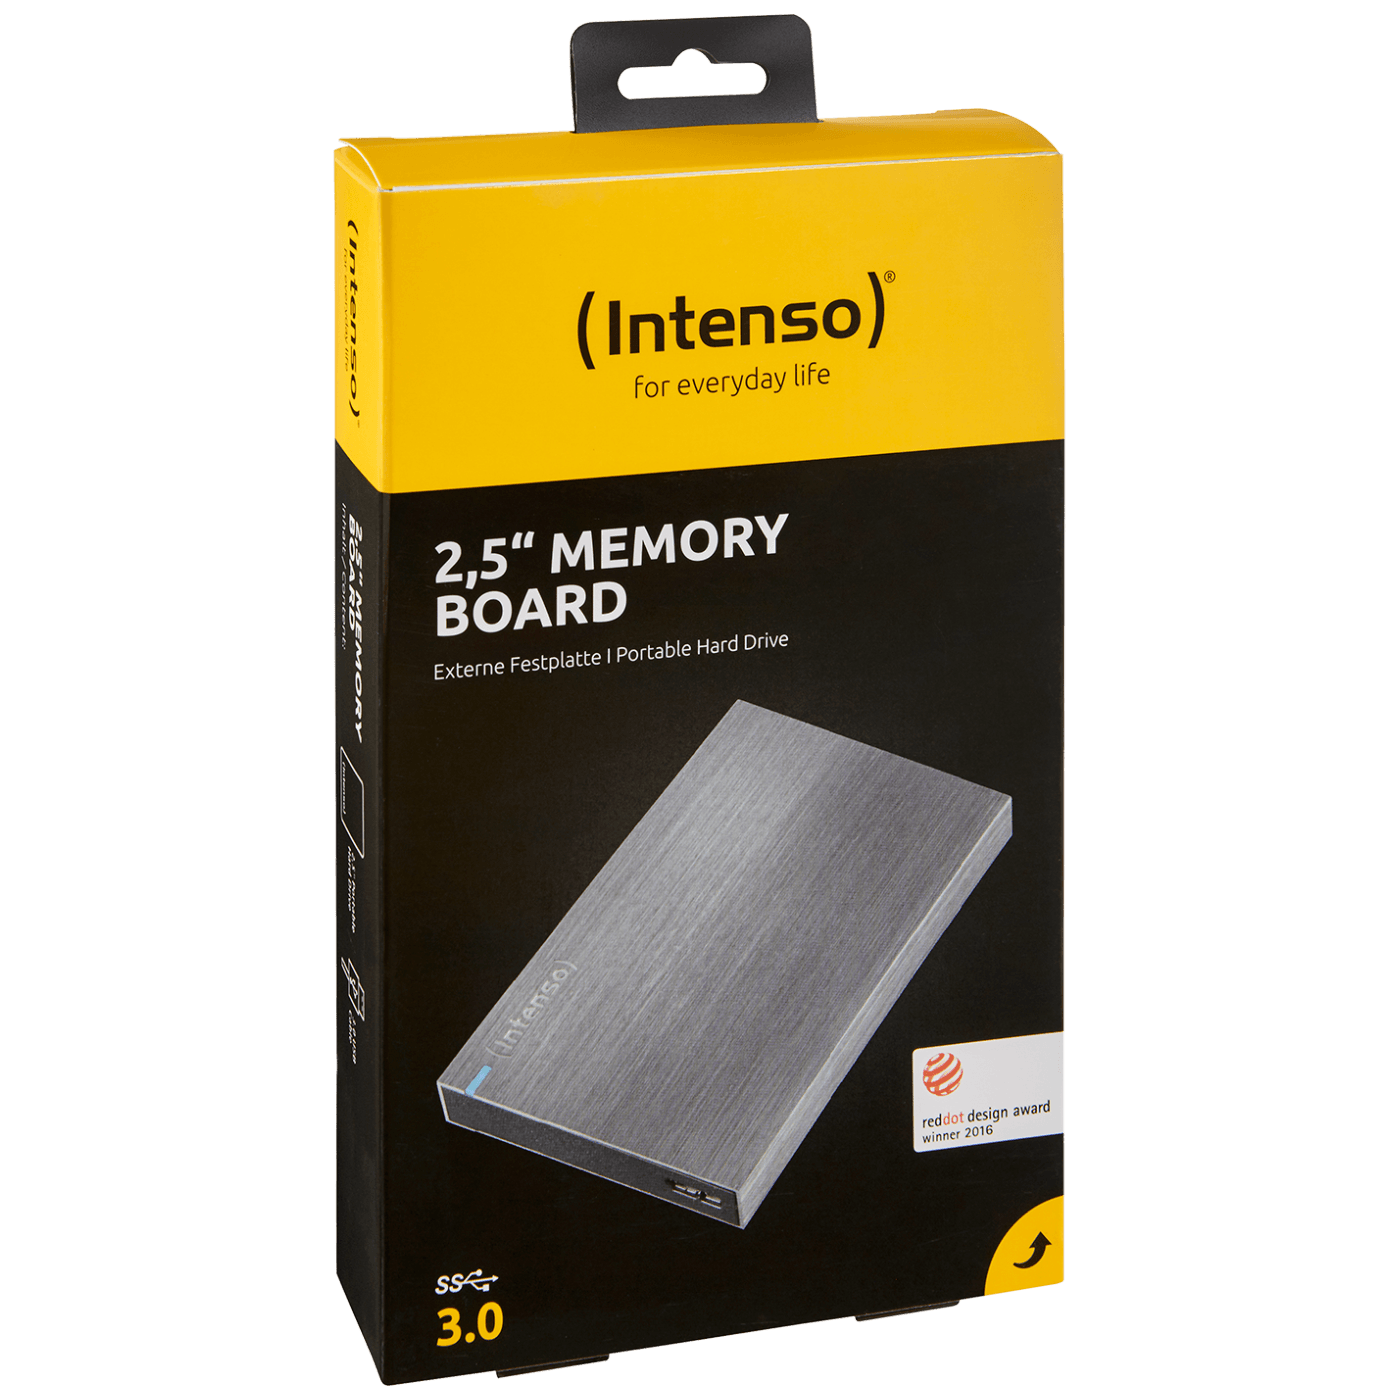 HDD3.0-2TB/Memory Board